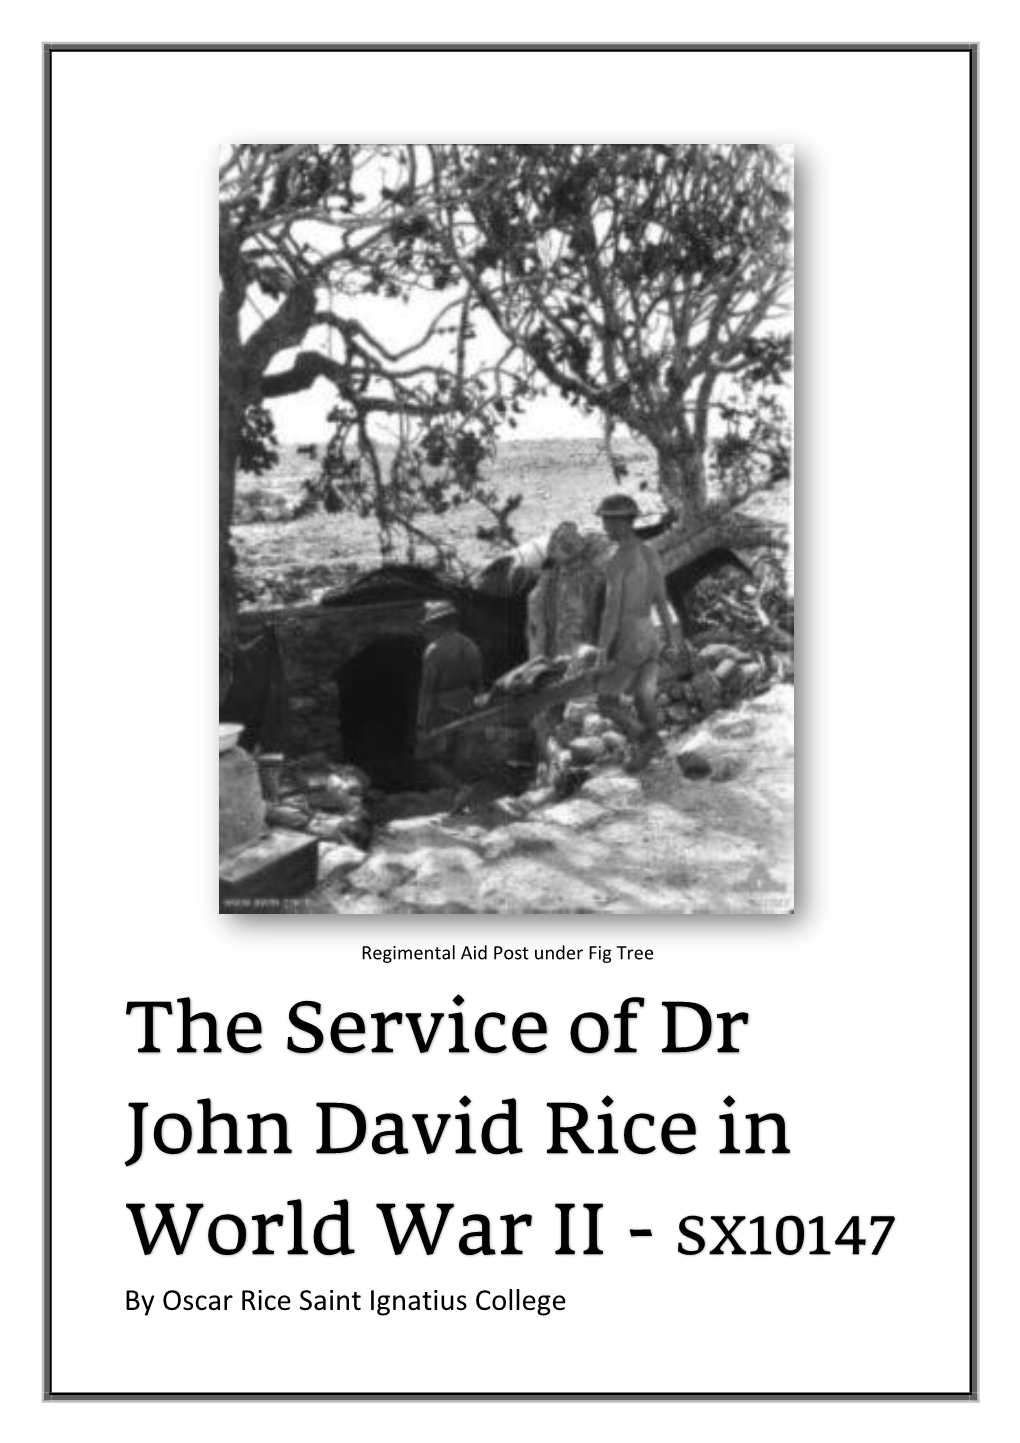 Oscar Rice Saint Ignatius College Premier’S ANZAC Spirit School Prize 2020 the Service of Dr John David Rice in World War II by Oscar Rice Saint Ignatius College